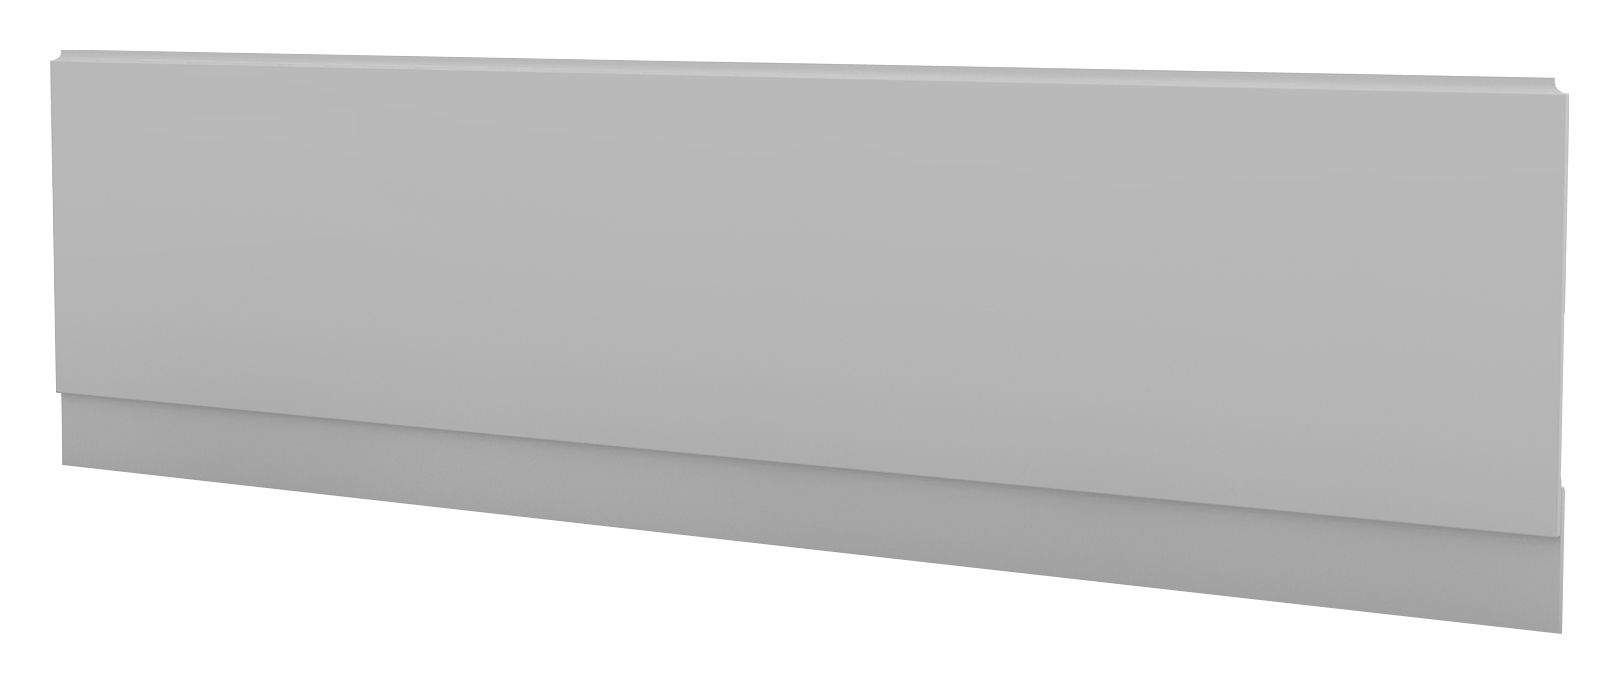 Duarti By Calypso 1800mm Bath Front Panel with Plinth - Matt White